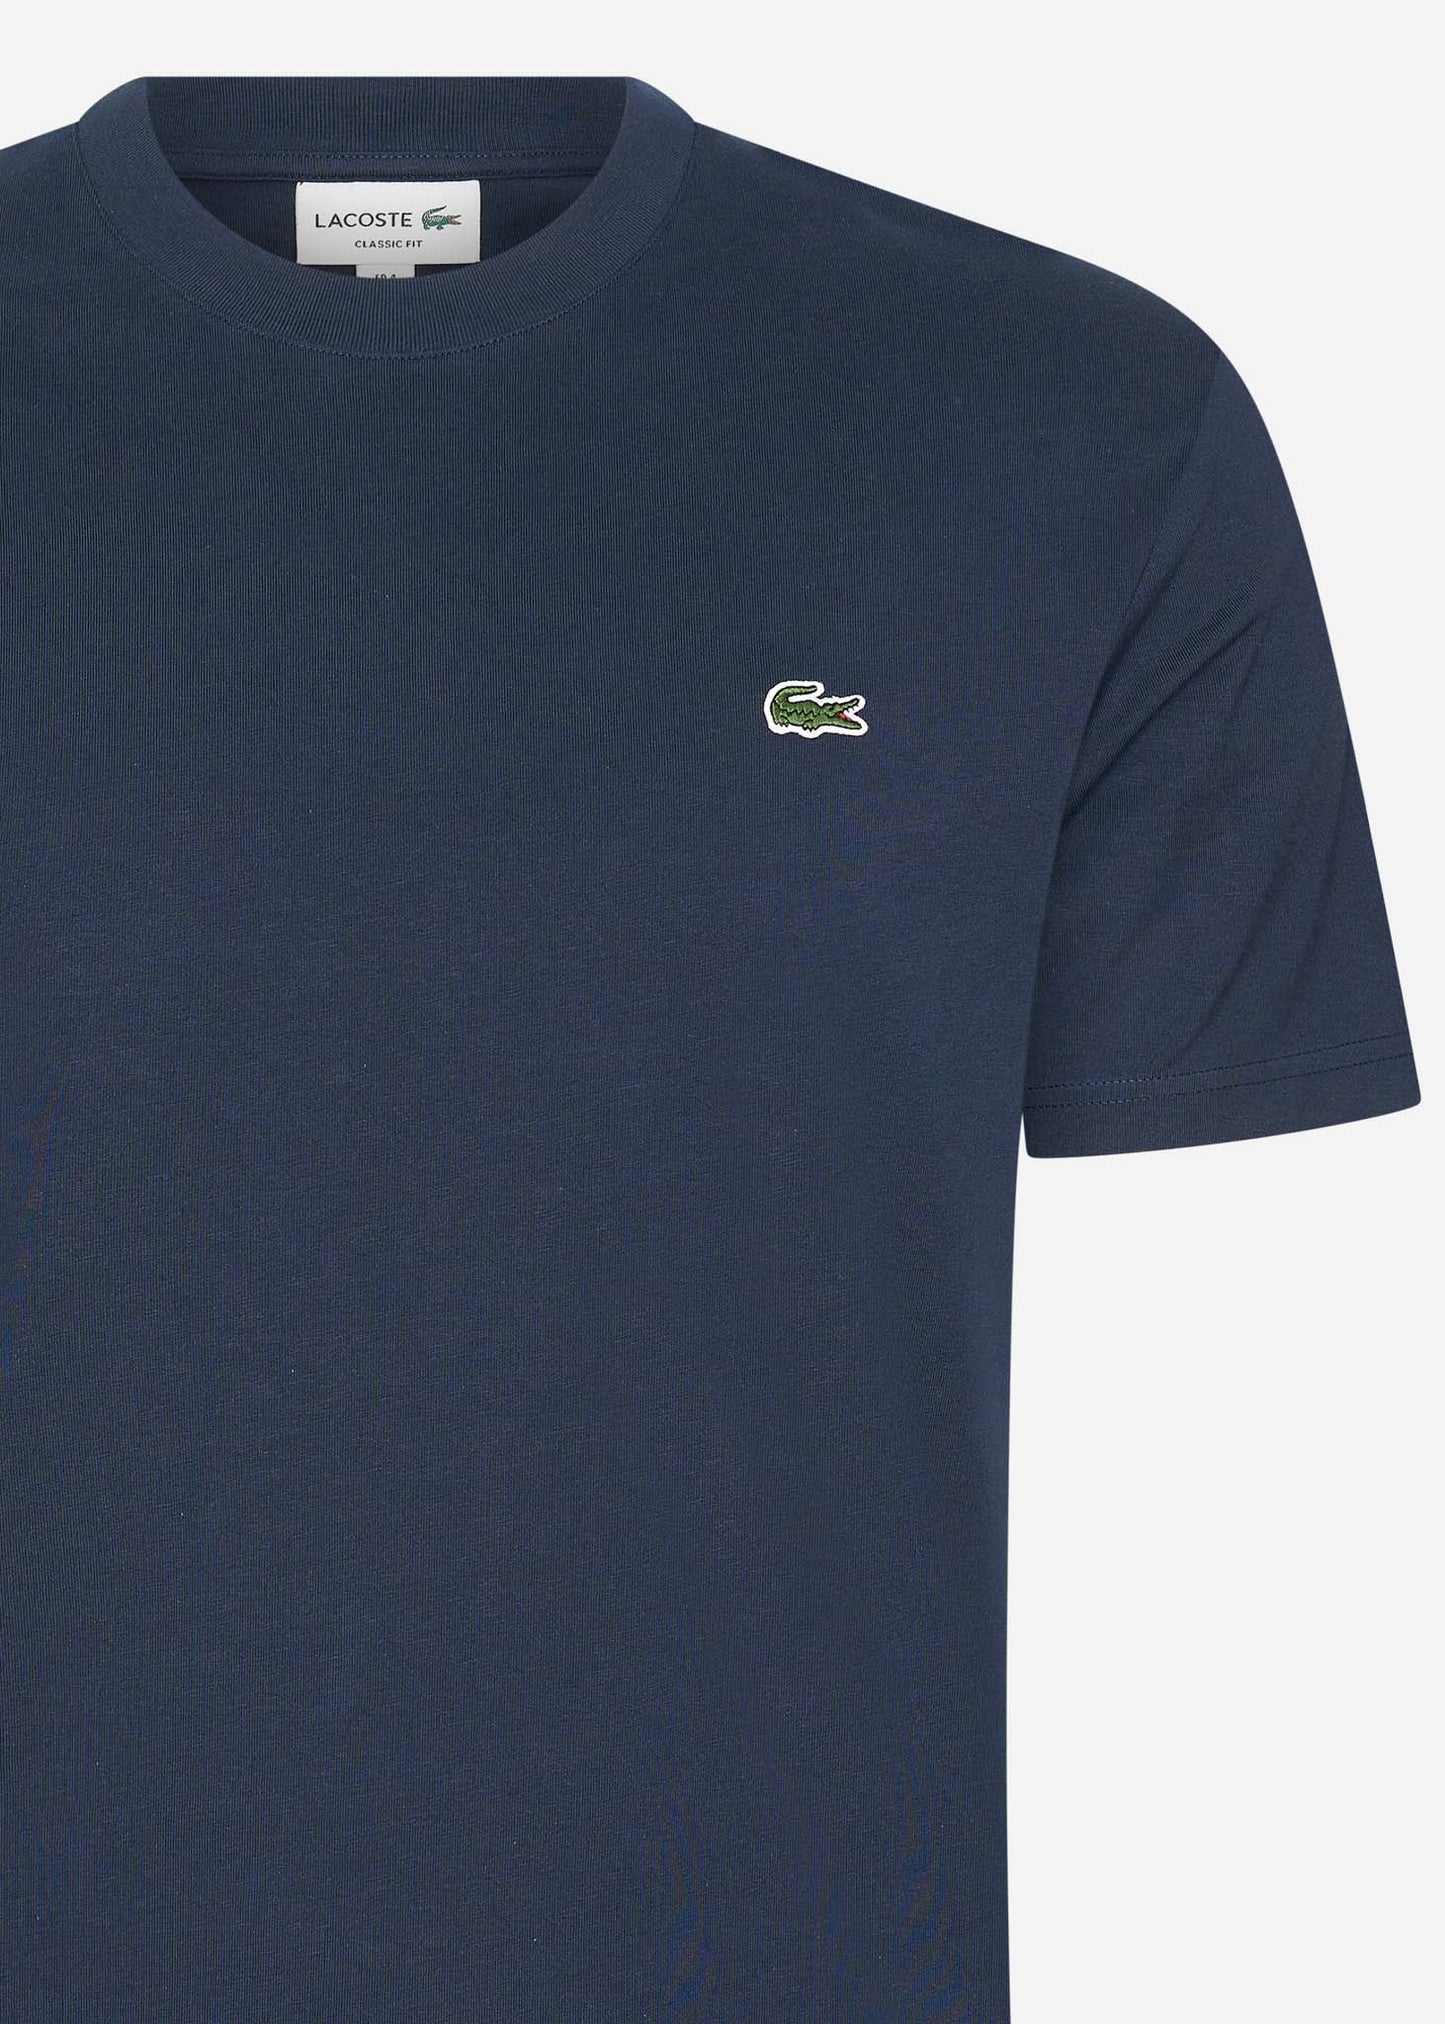 Lacoste T-shirts  Men tee shirt - navy blue 